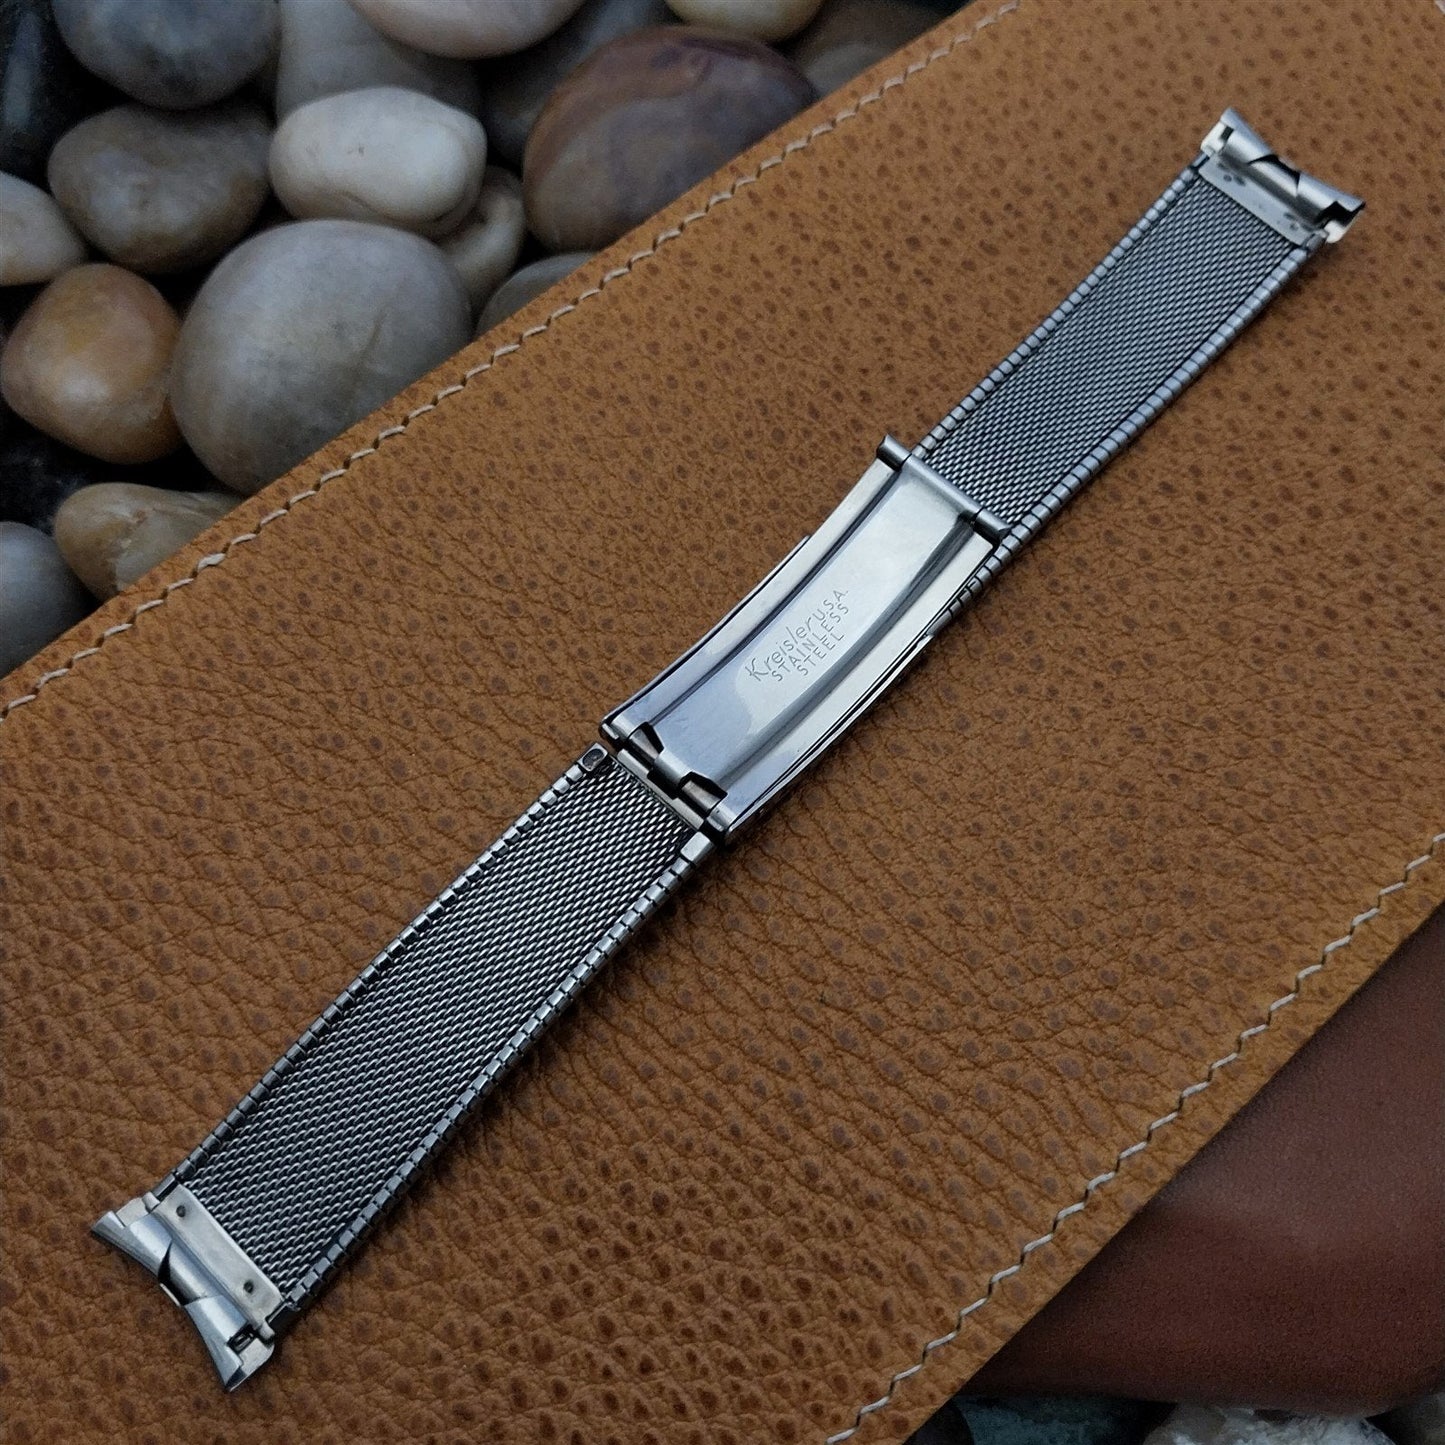 19mm 18mm 17.2mm Stainless Steel Kreisler USA Unused 1960s Vintage Watch Band